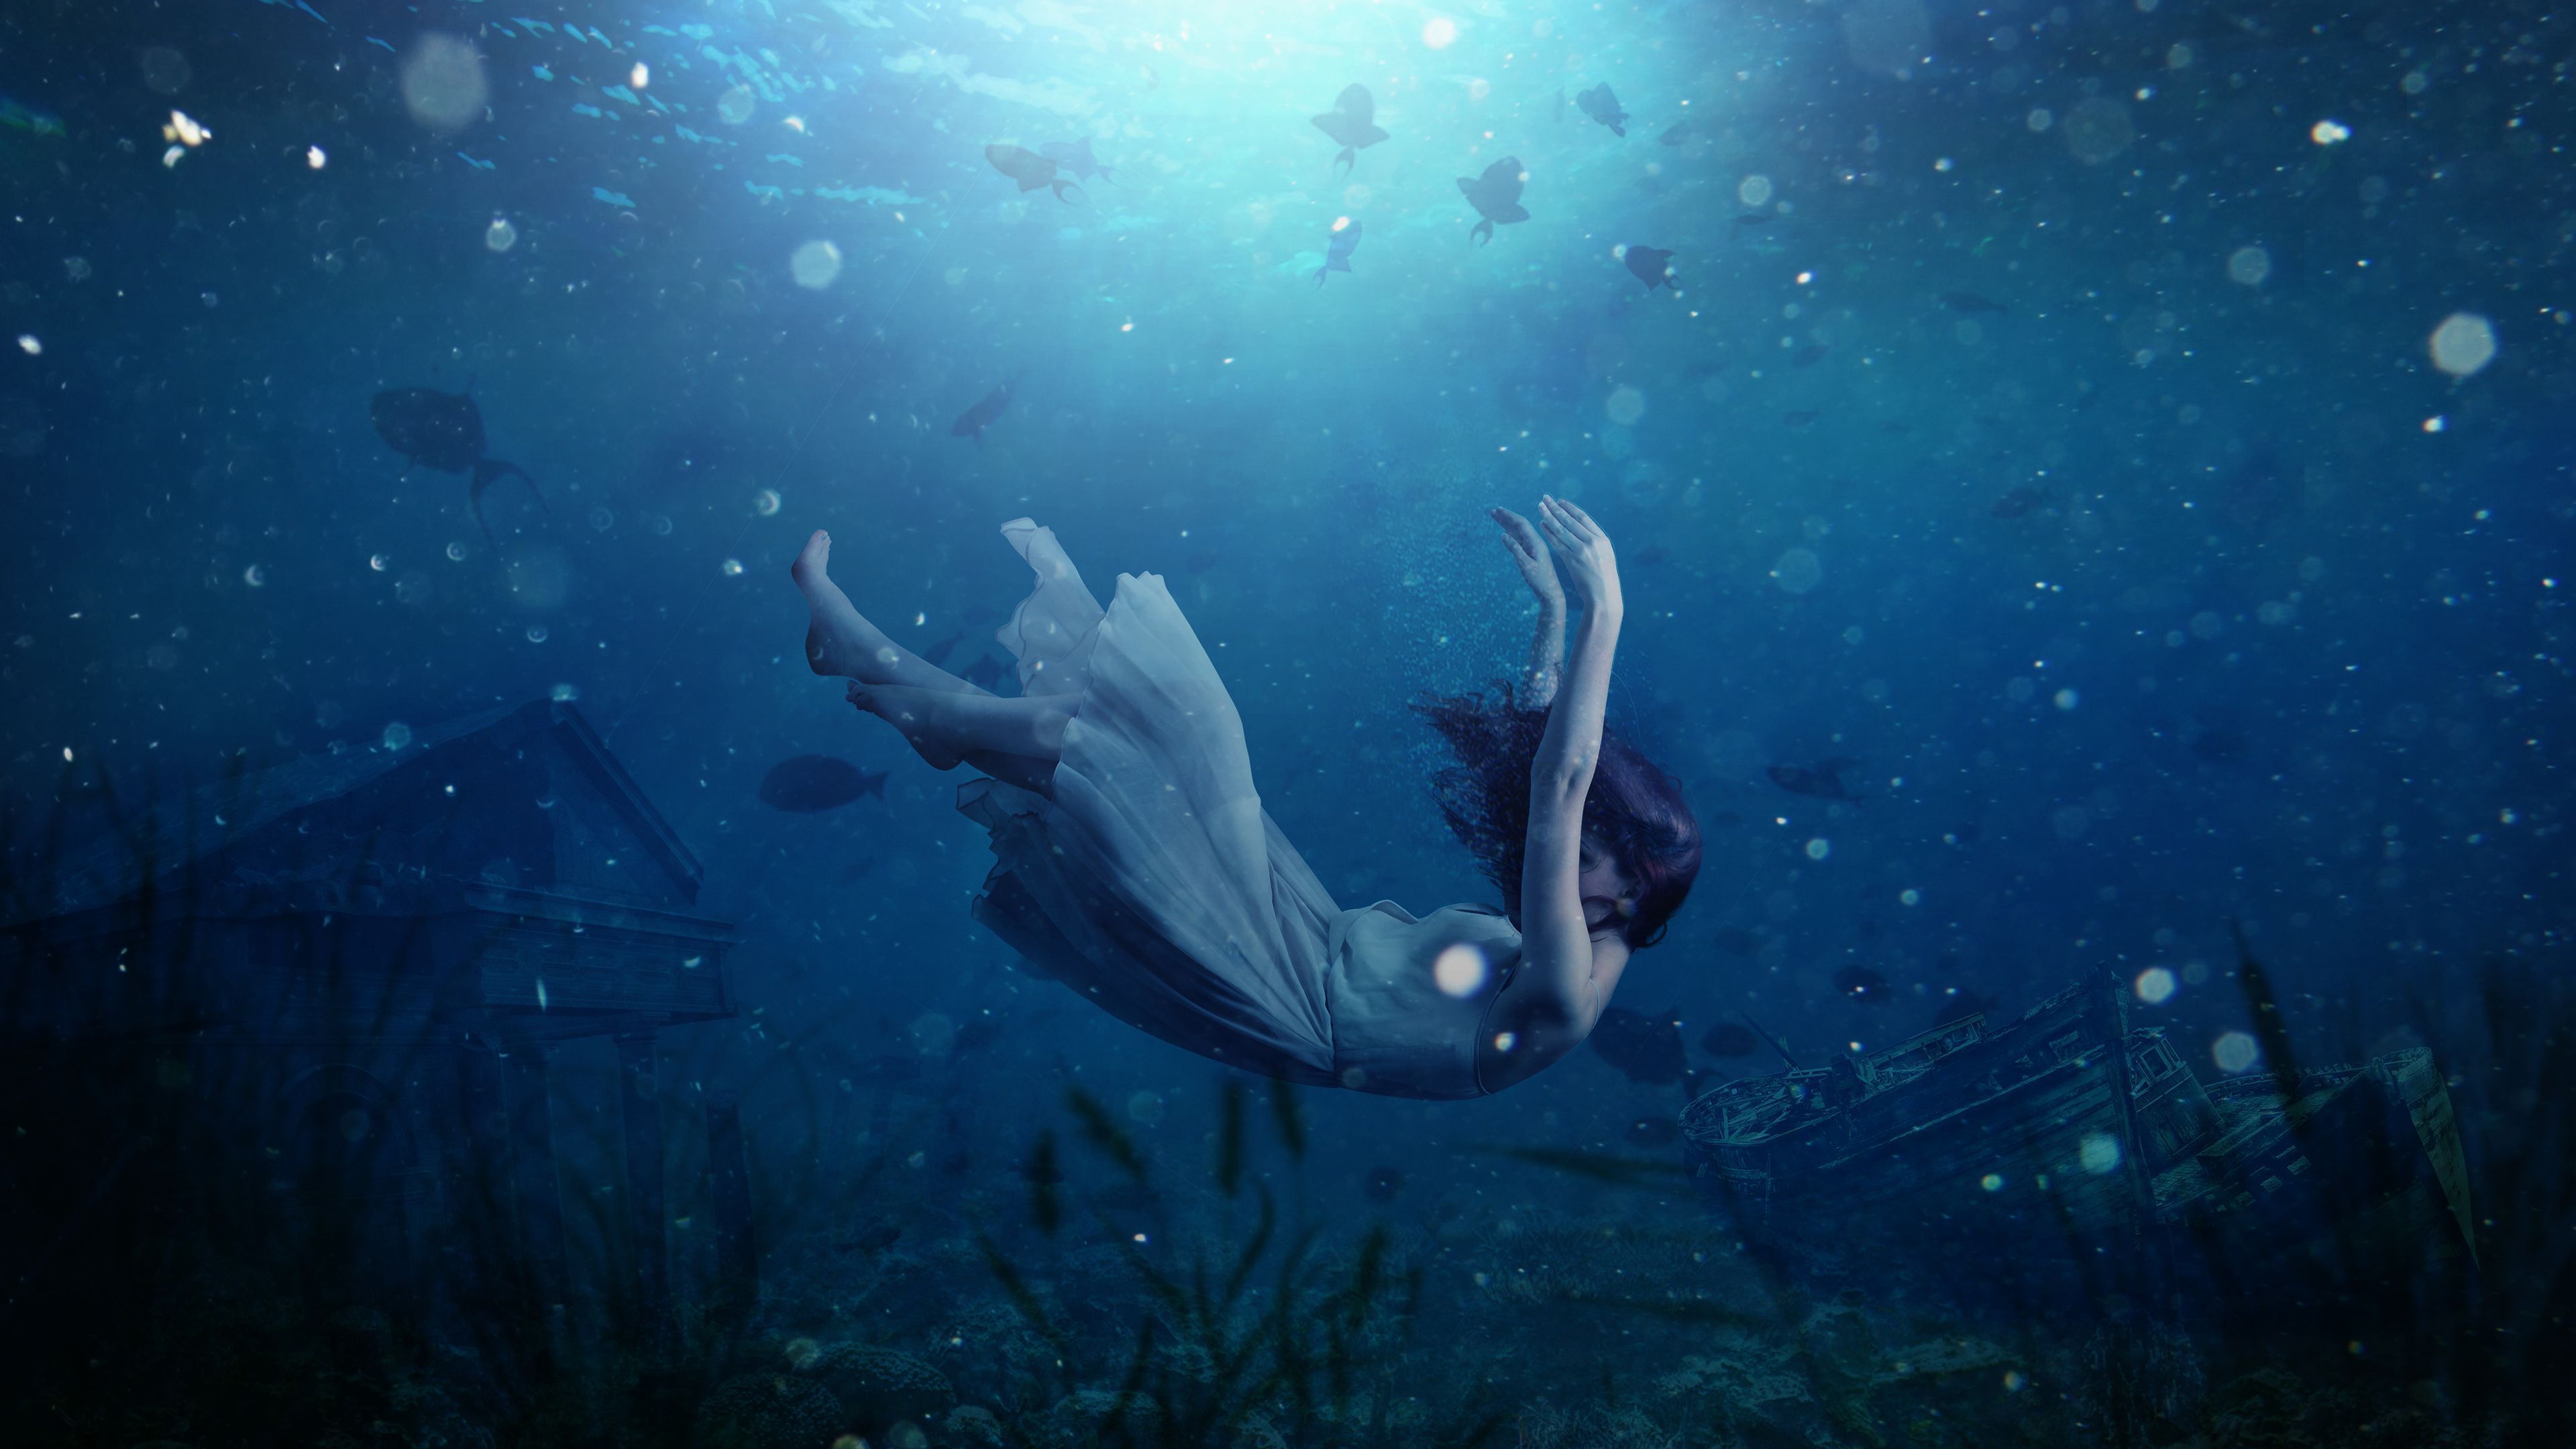 Girl Underwater Dream 4K Wallpaper. Nokia Wallpaper in 2020